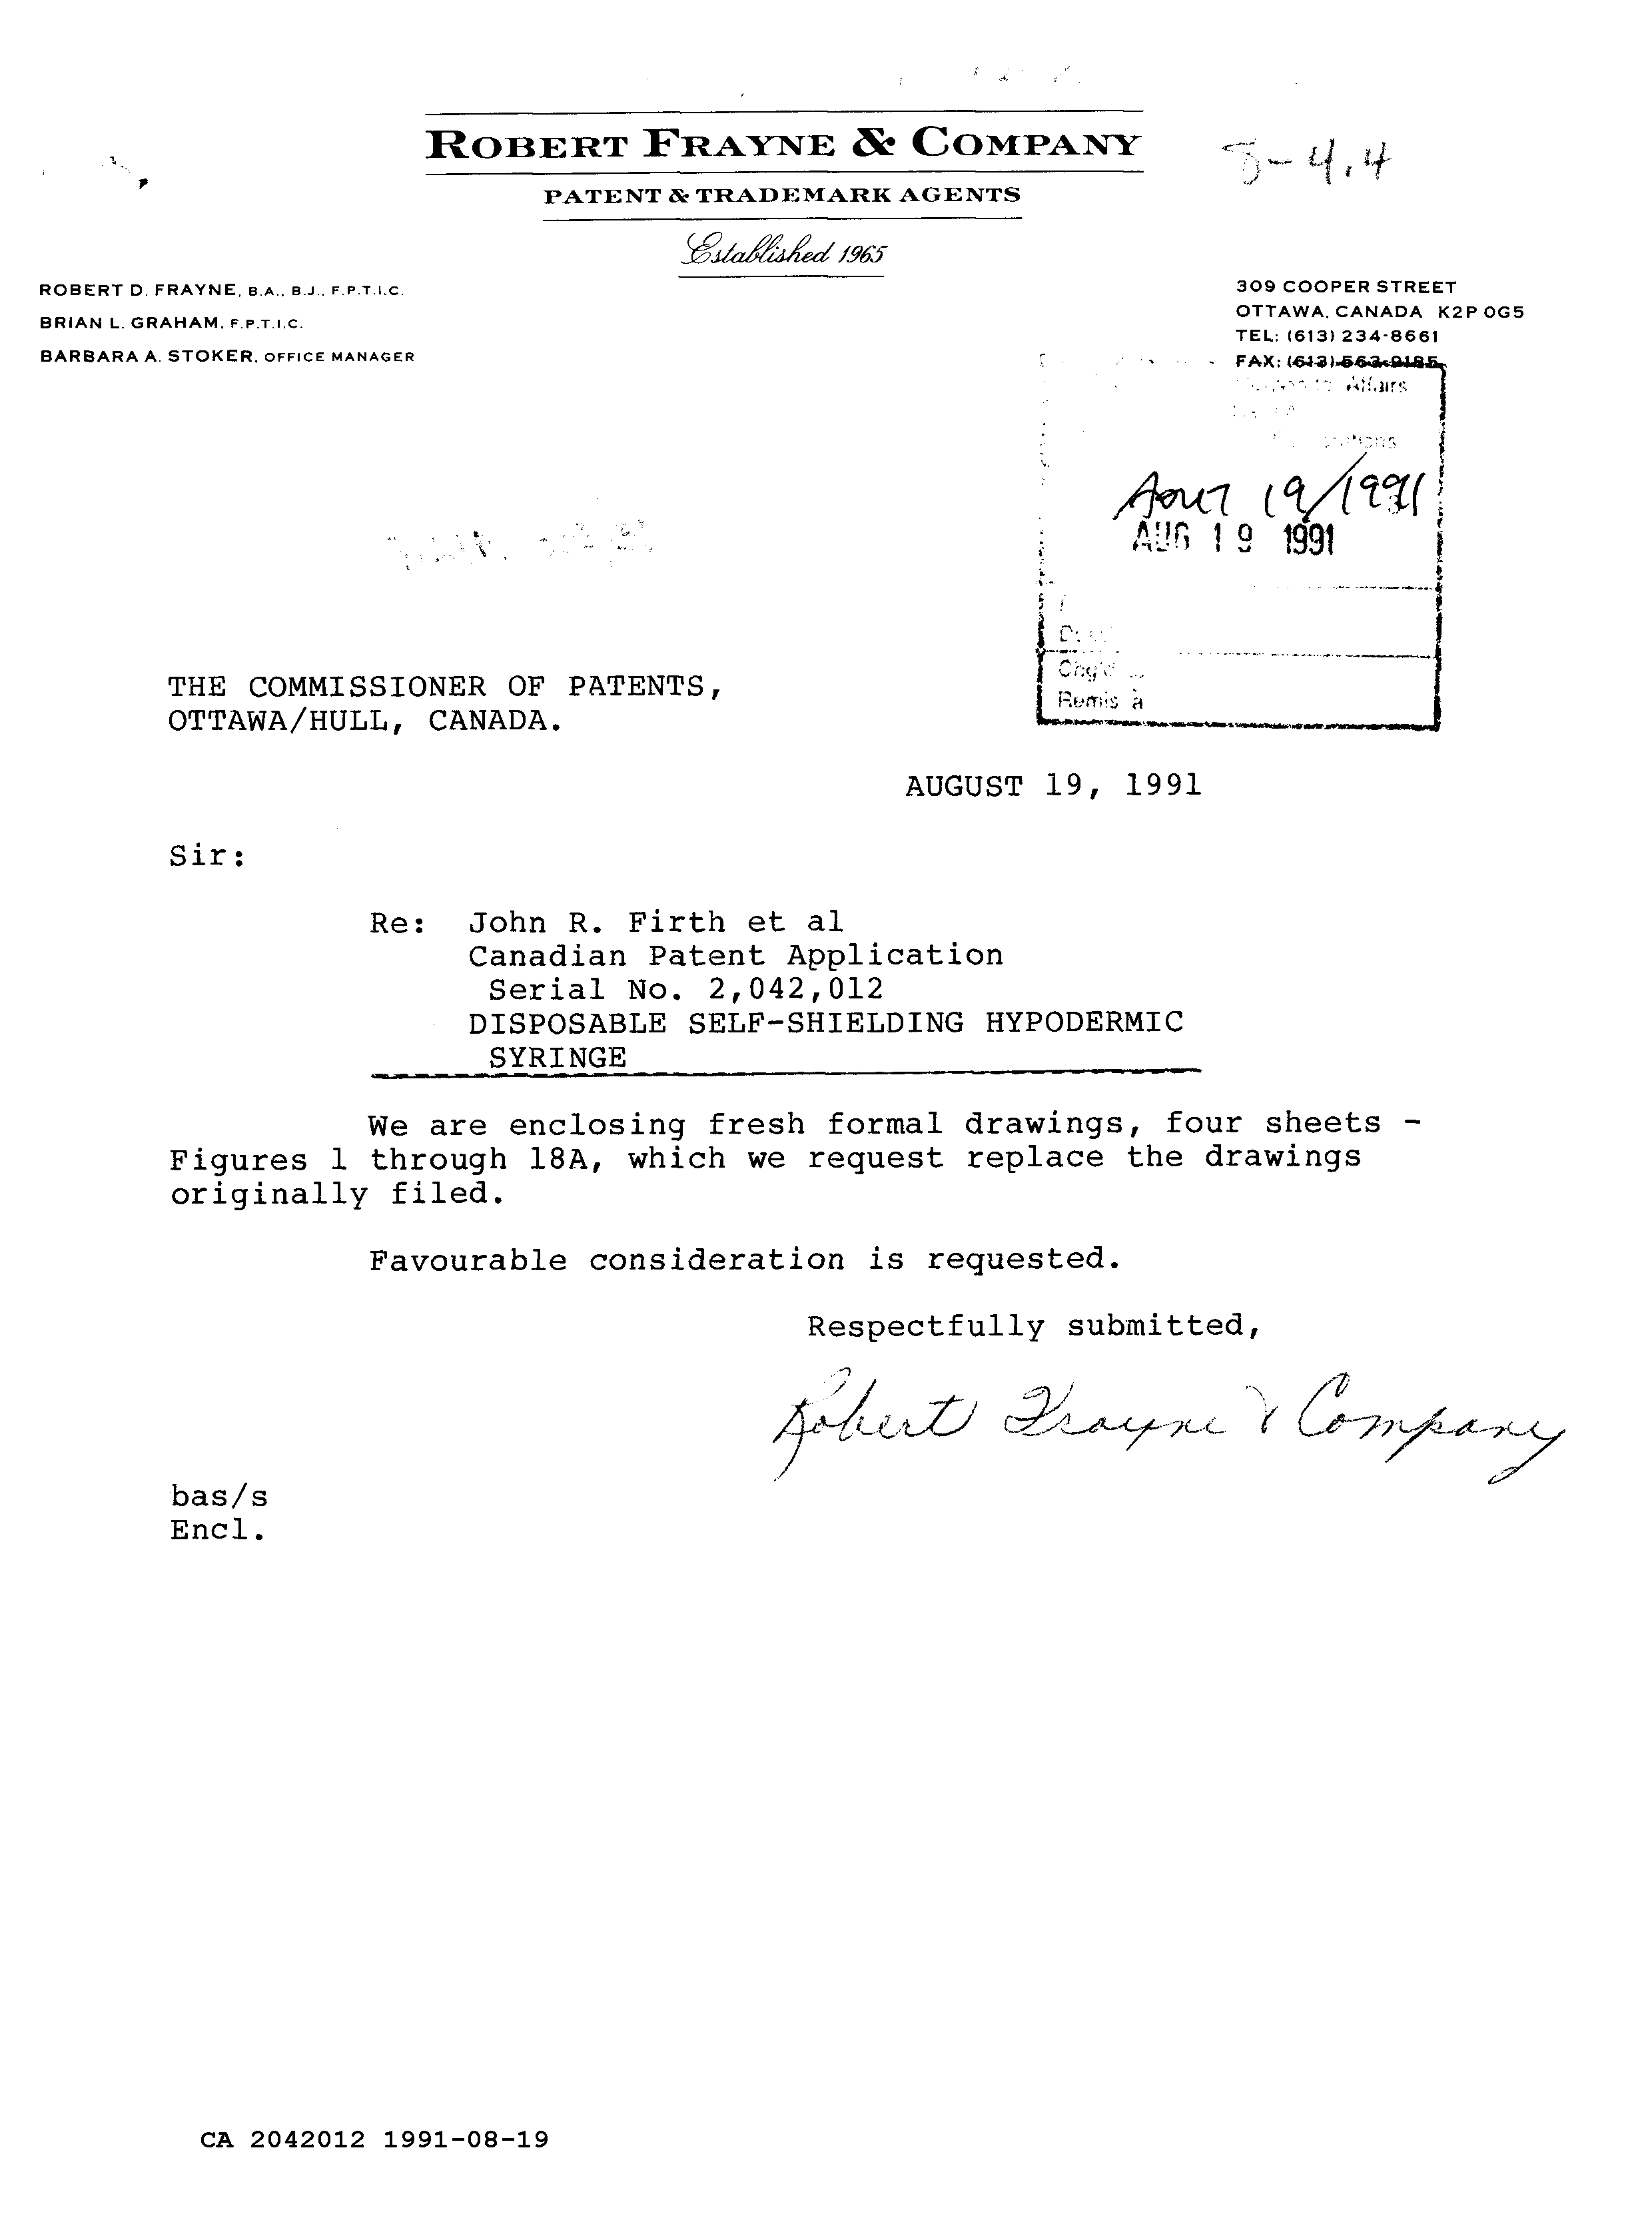 Canadian Patent Document 2042012. Prosecution Correspondence 19910819. Image 1 of 1